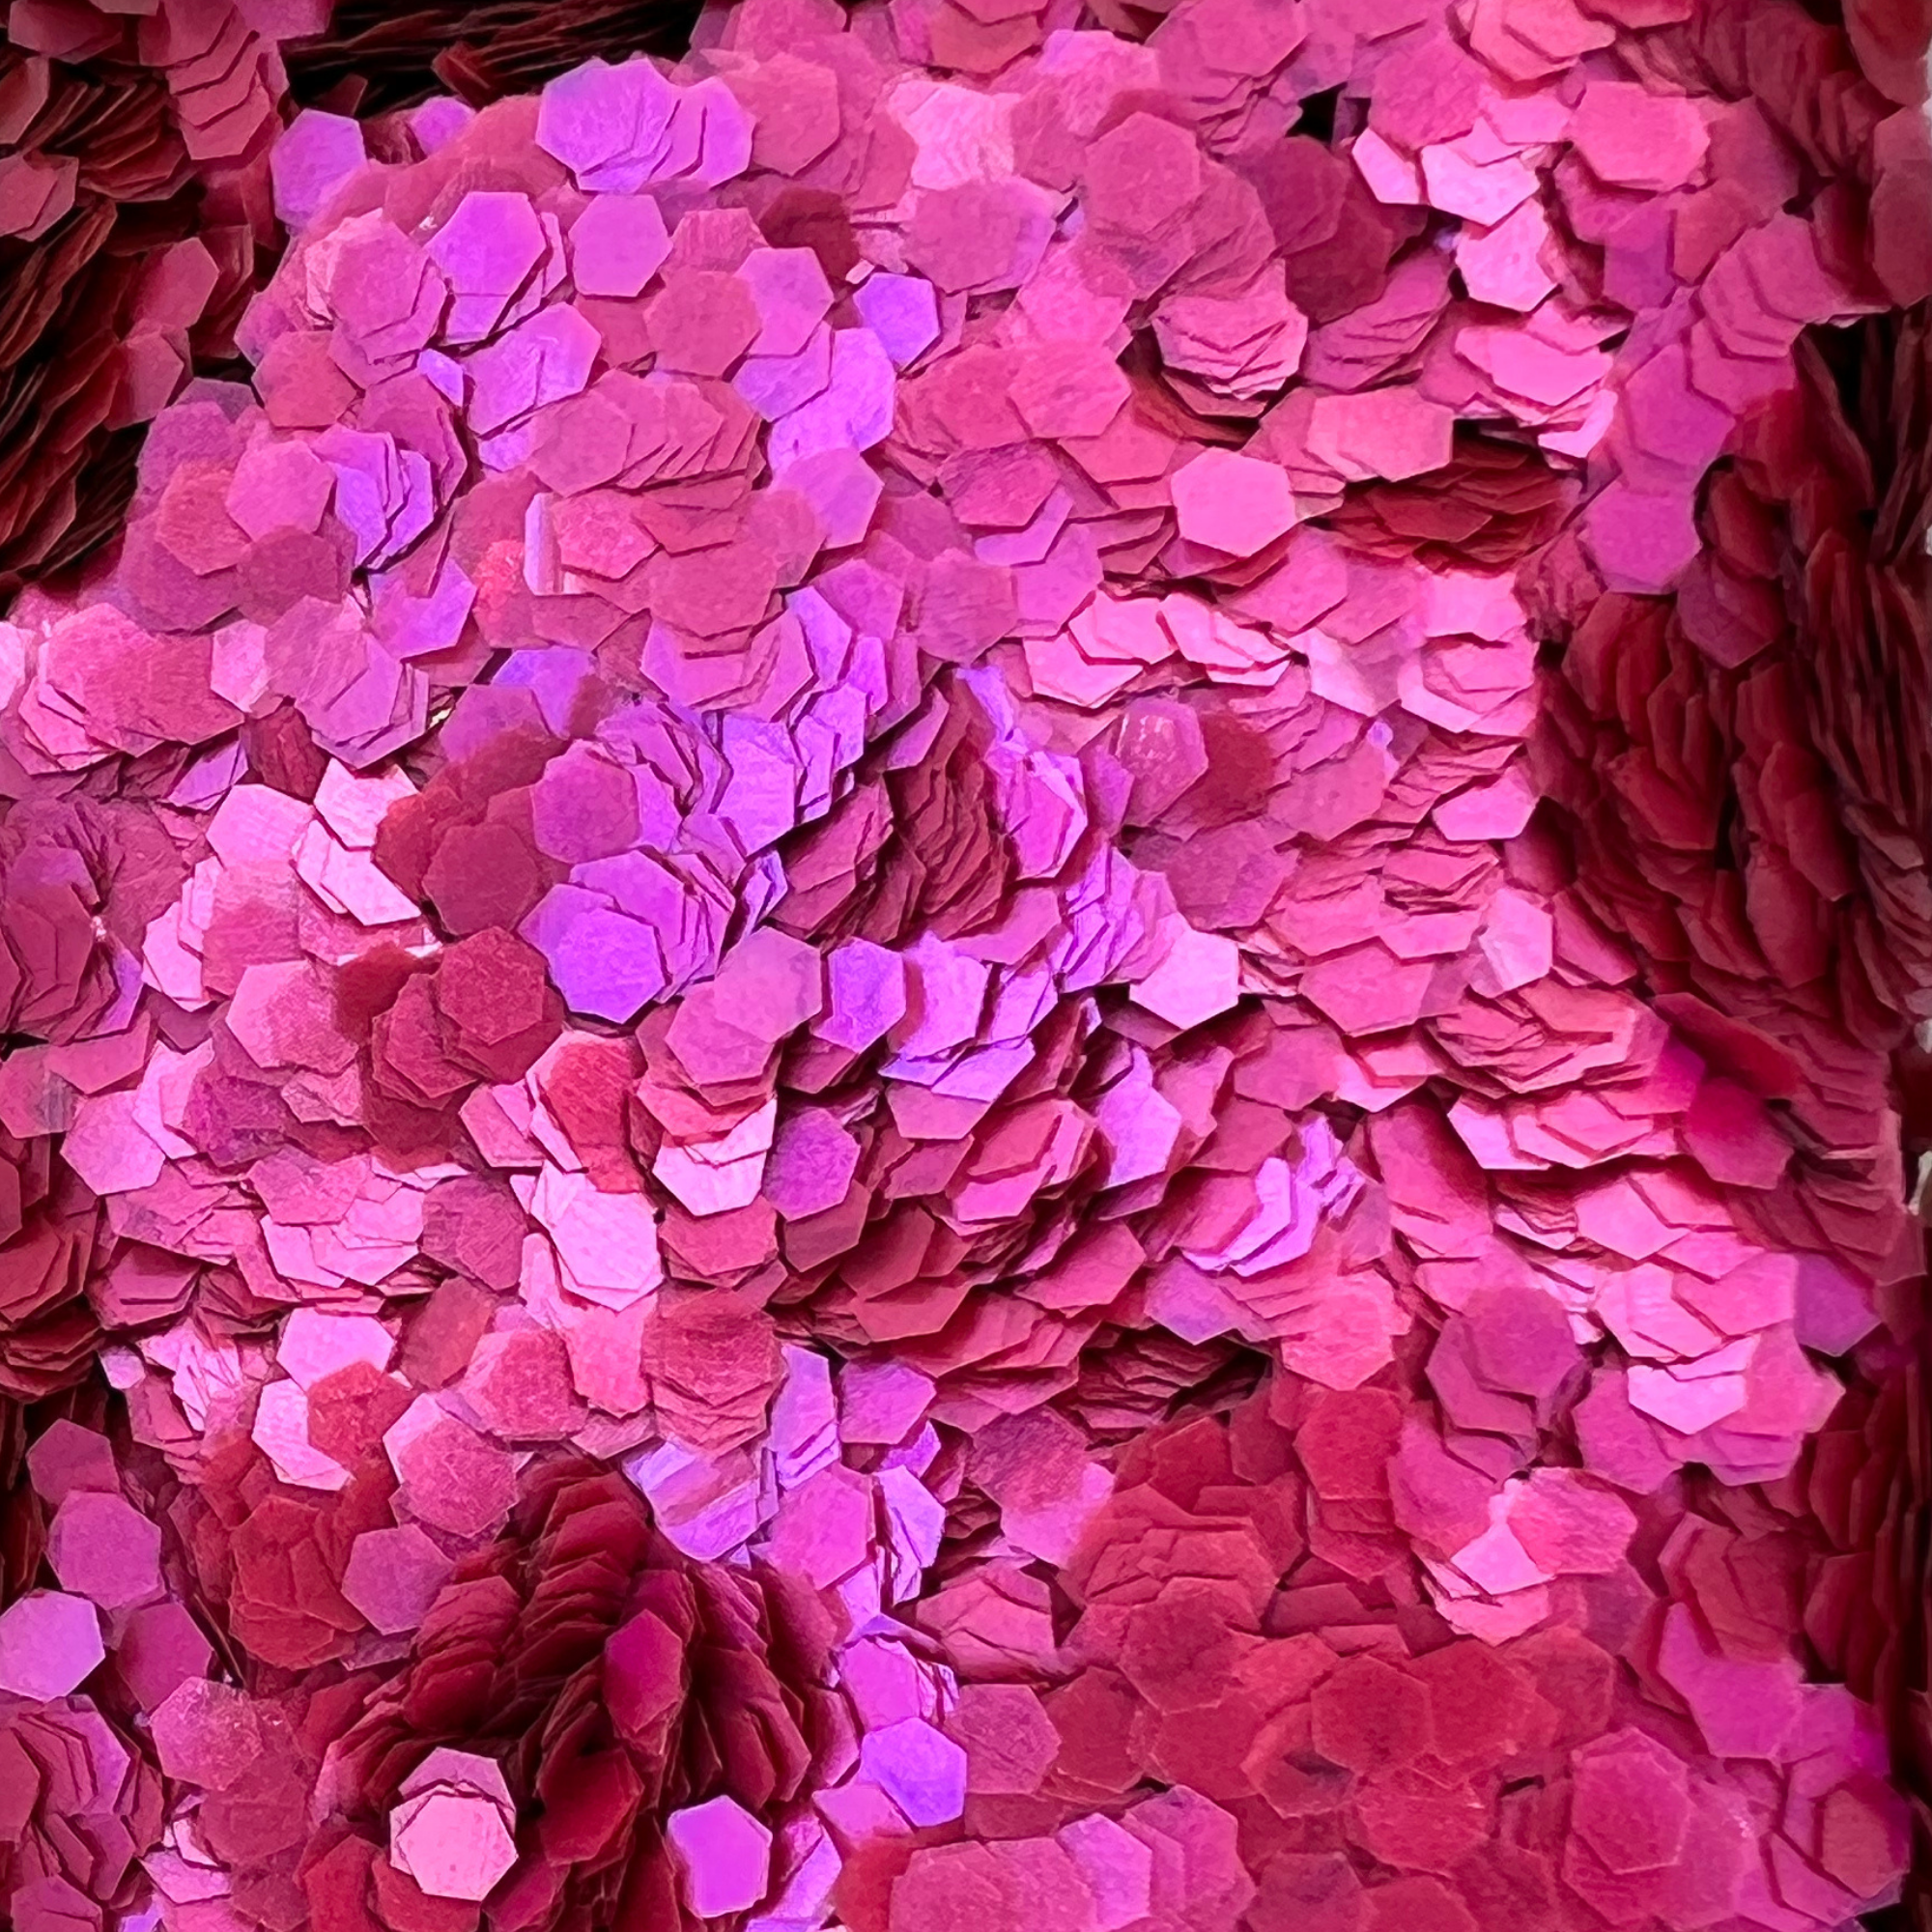 100% plastic free biodegradable glitter in raspberry sorbet shade